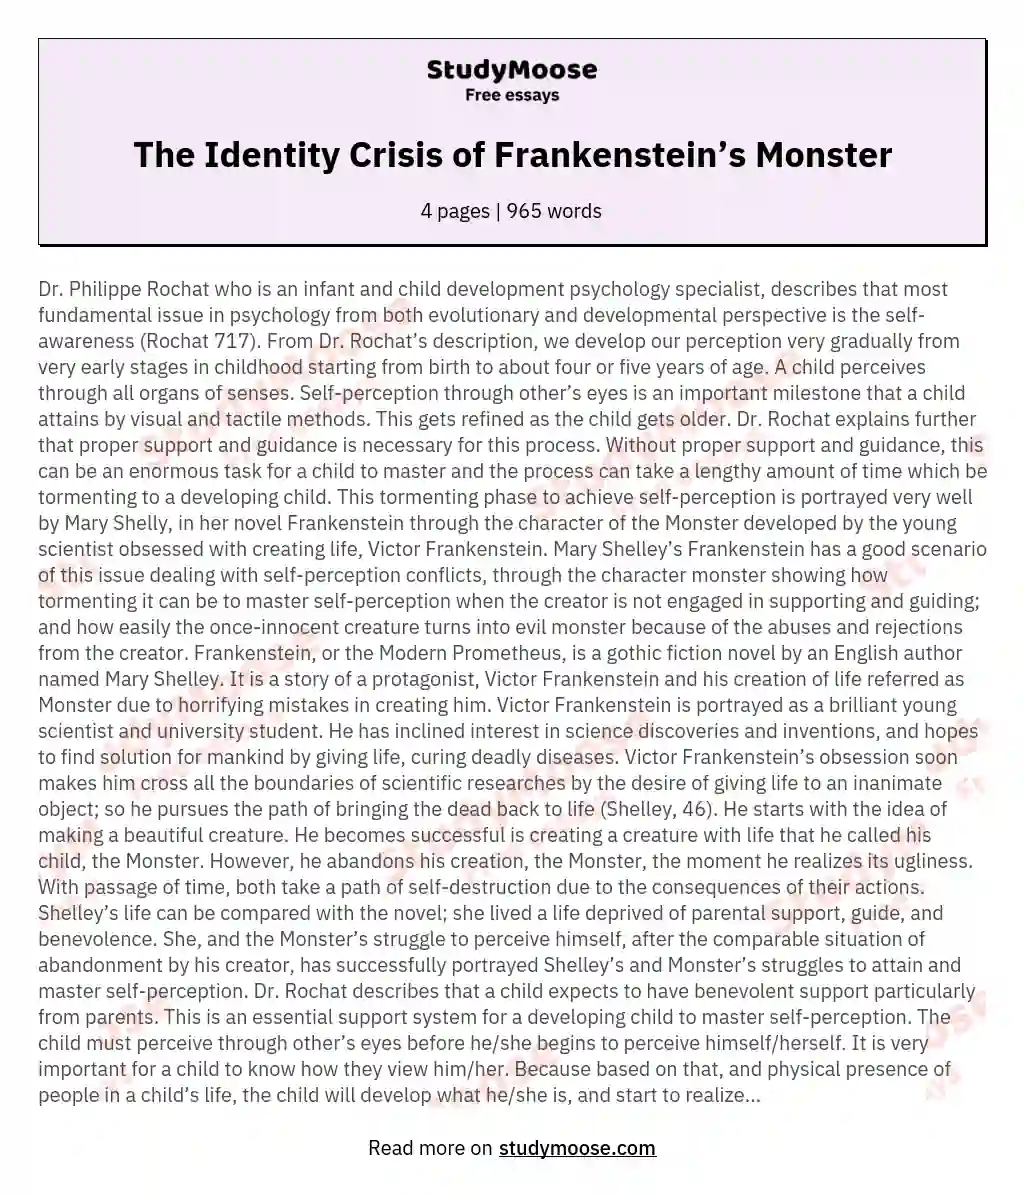 The Identity Crisis of Frankenstein’s Monster essay